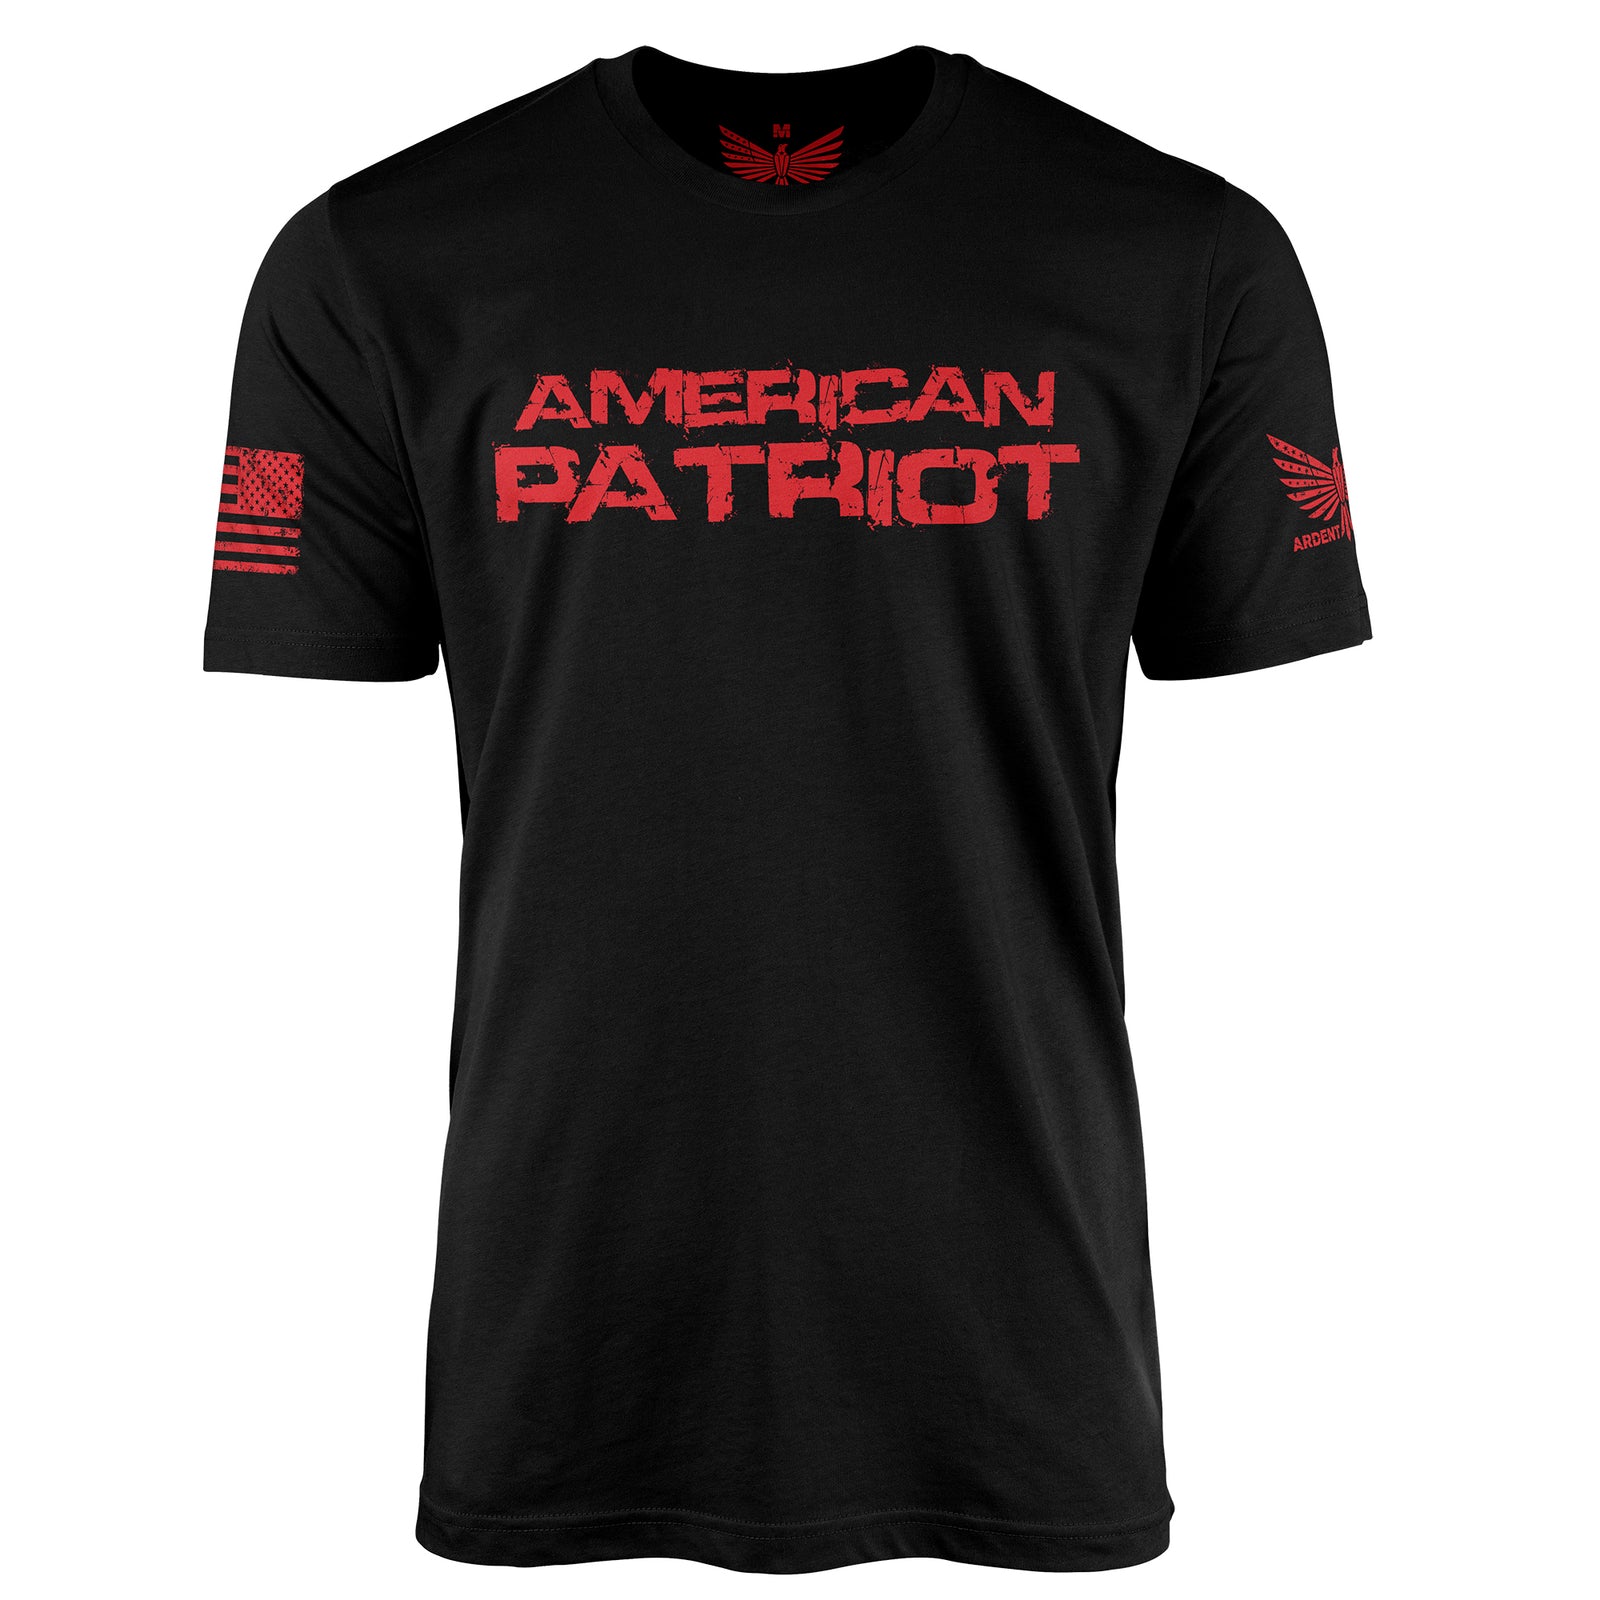 American Patriot-Men's Shirt-Black-S-Ardent Patriot Apparel Co.